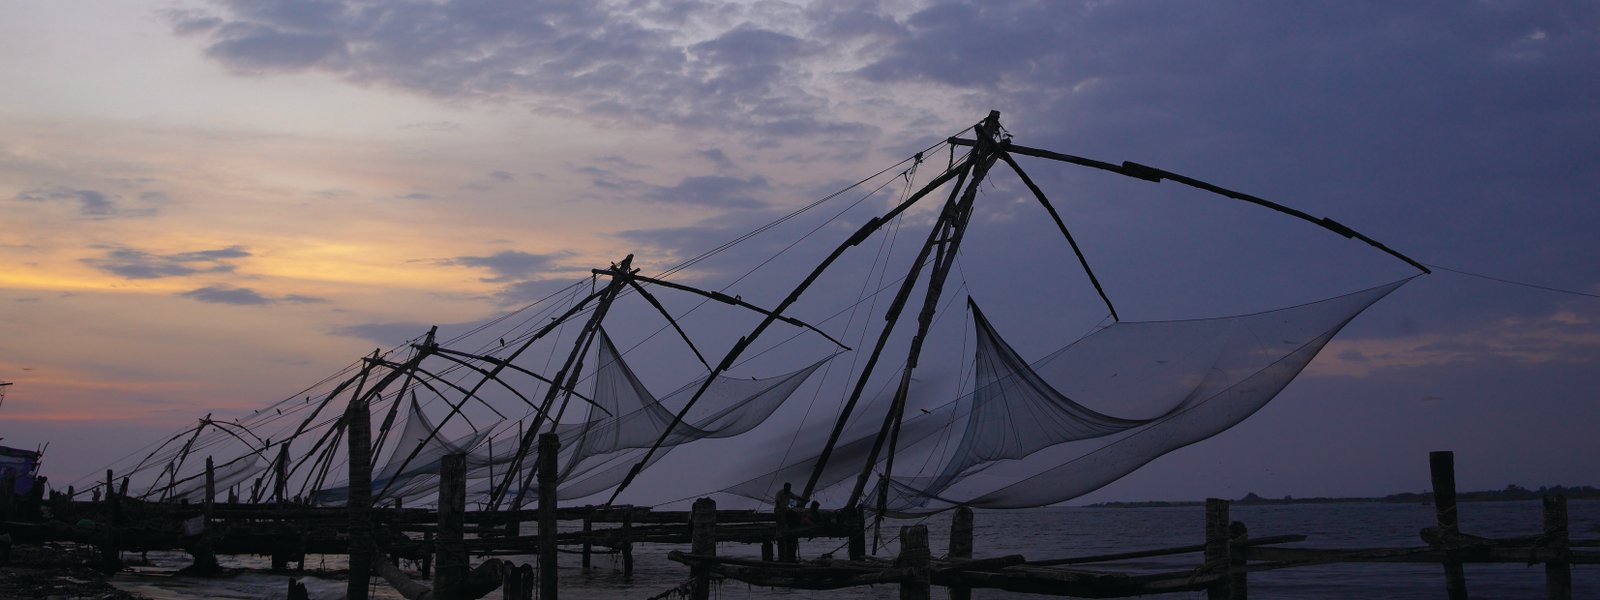 Chinese fishing nets in Fort Cochin, Kerala